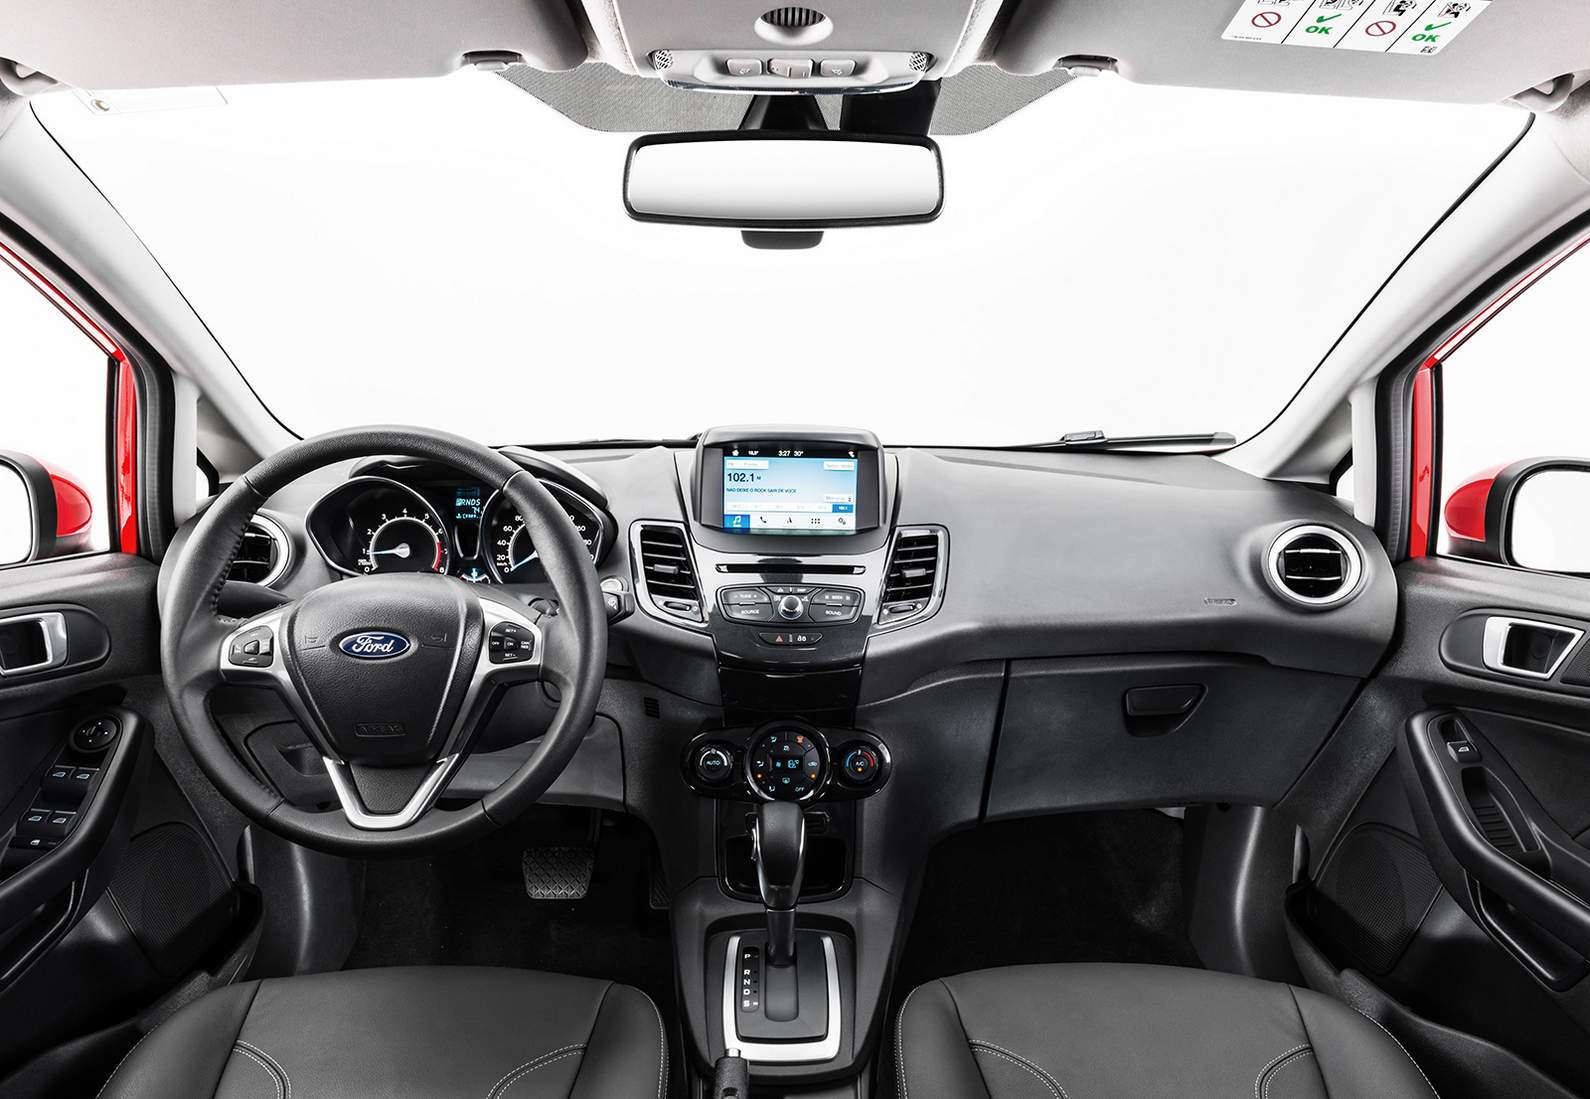 Ford New Fiesta - Interior